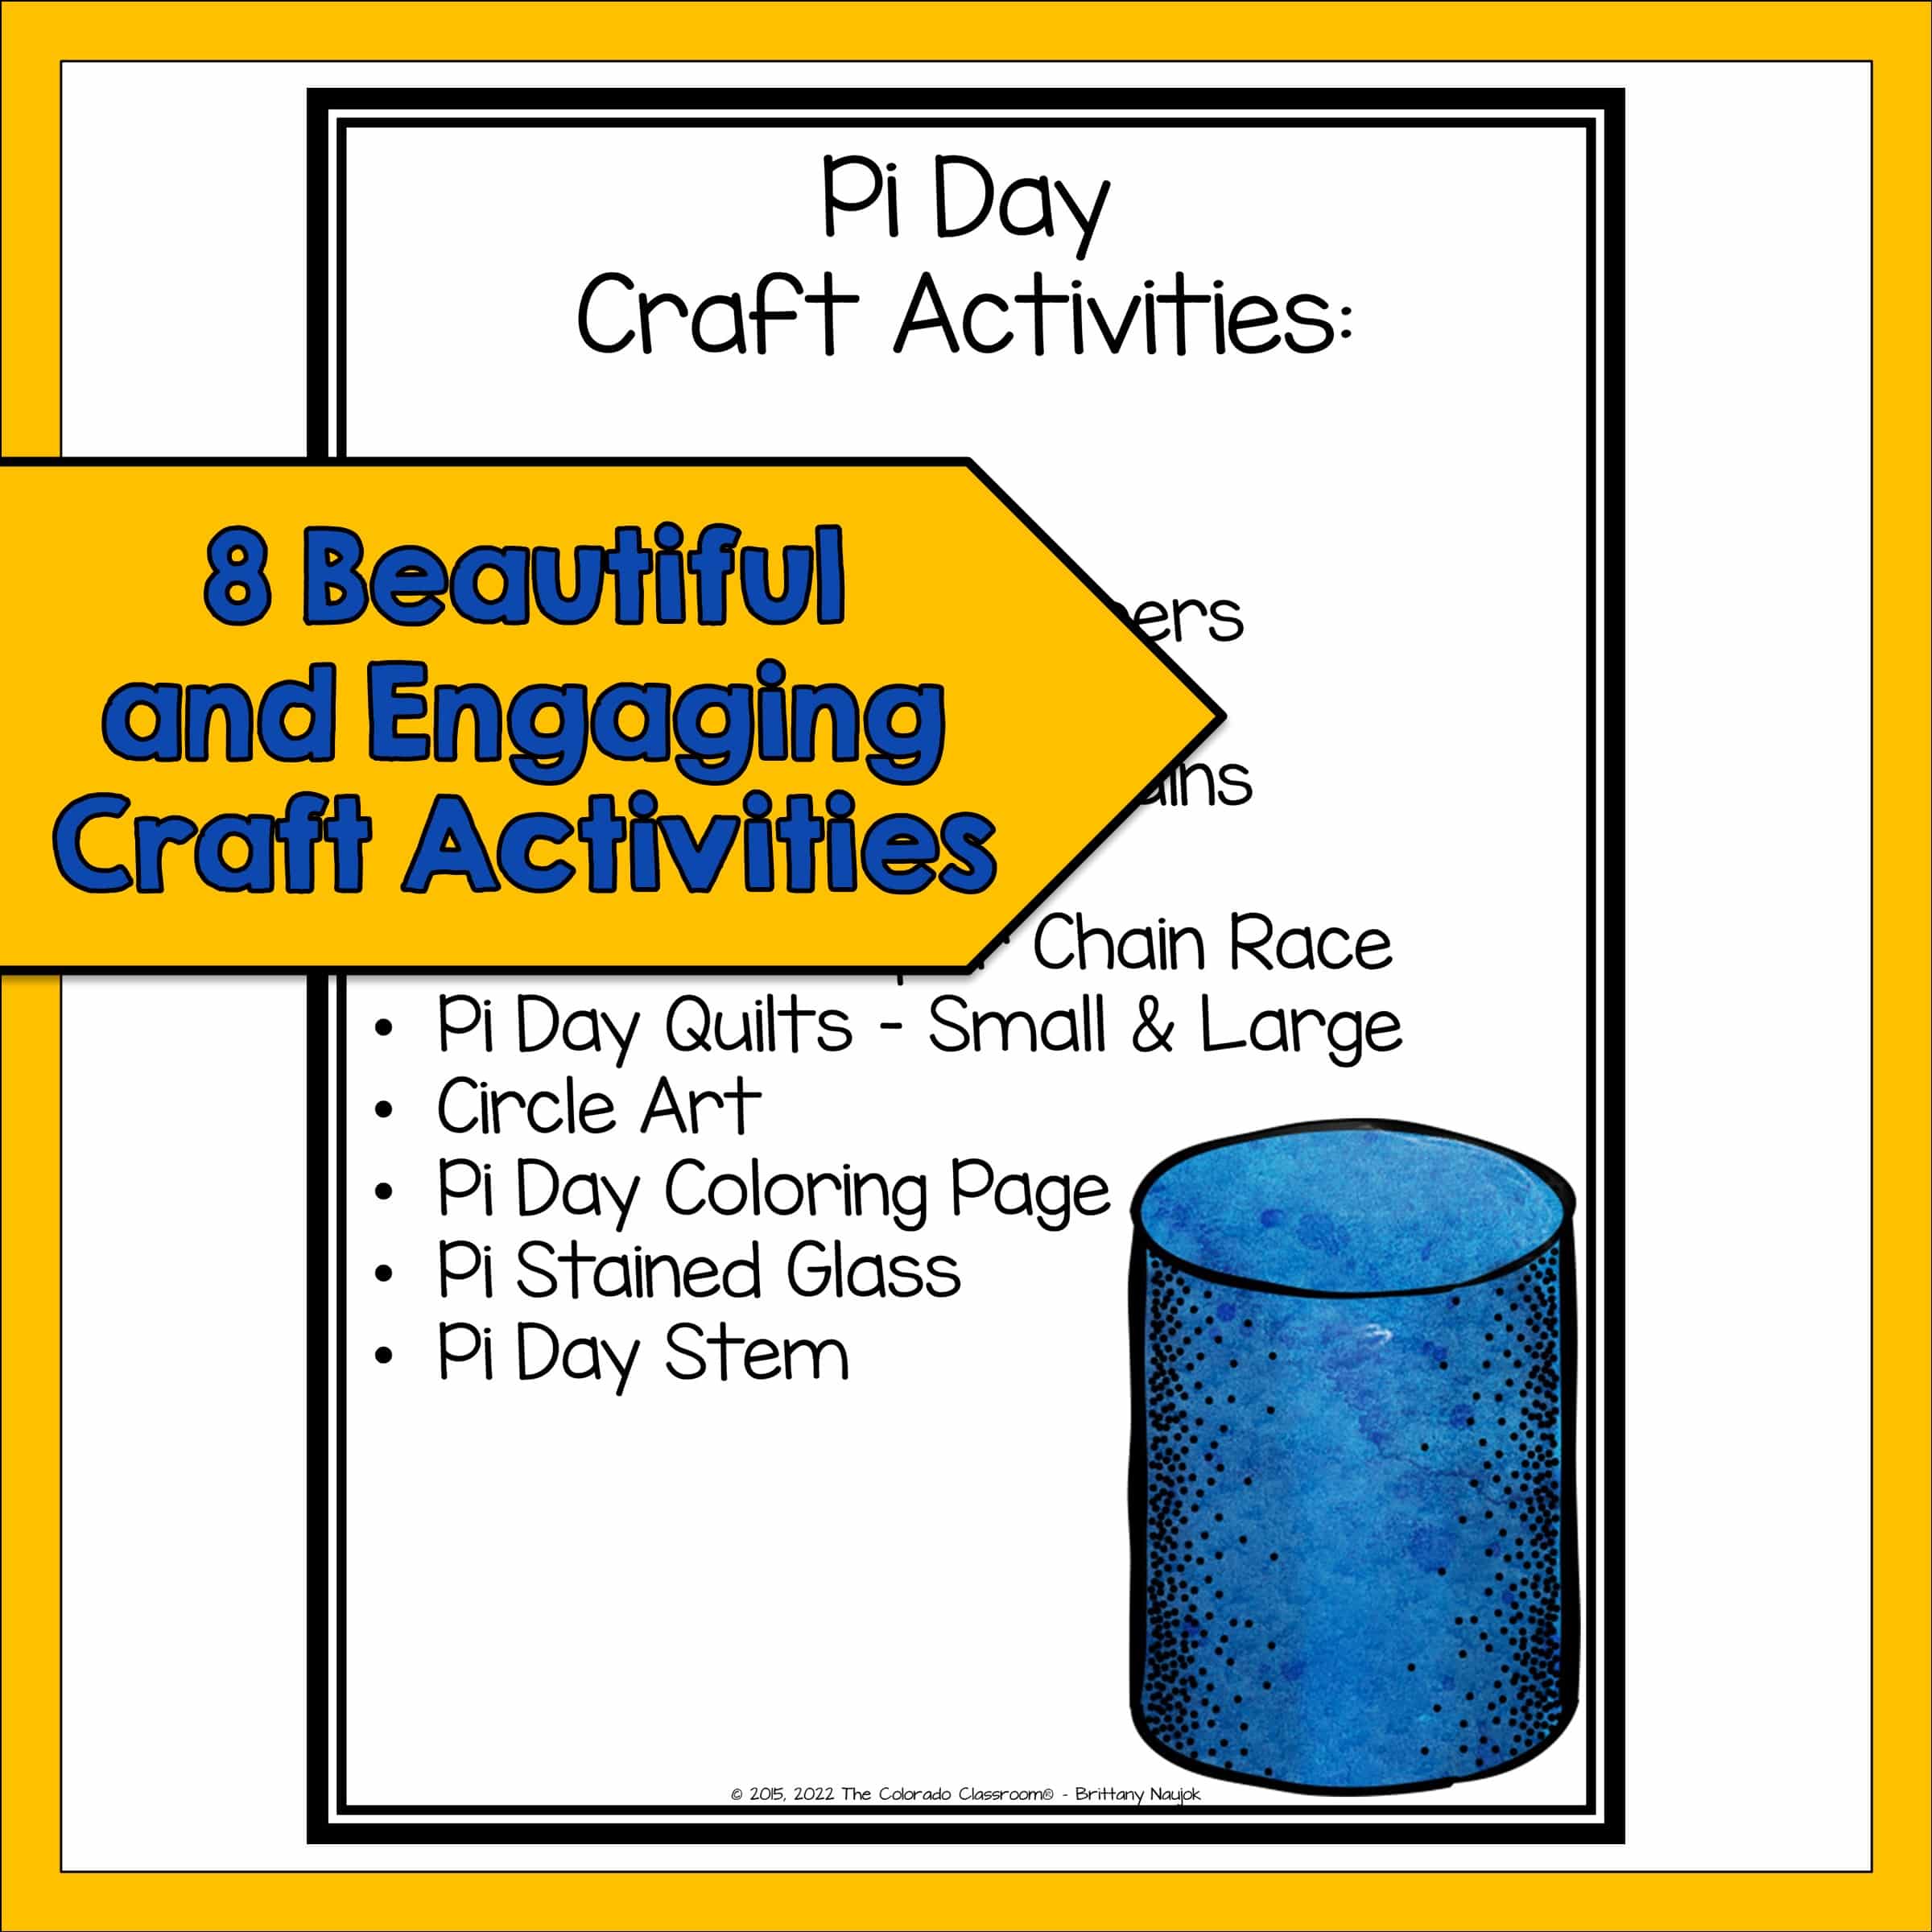 Pi day craft activities